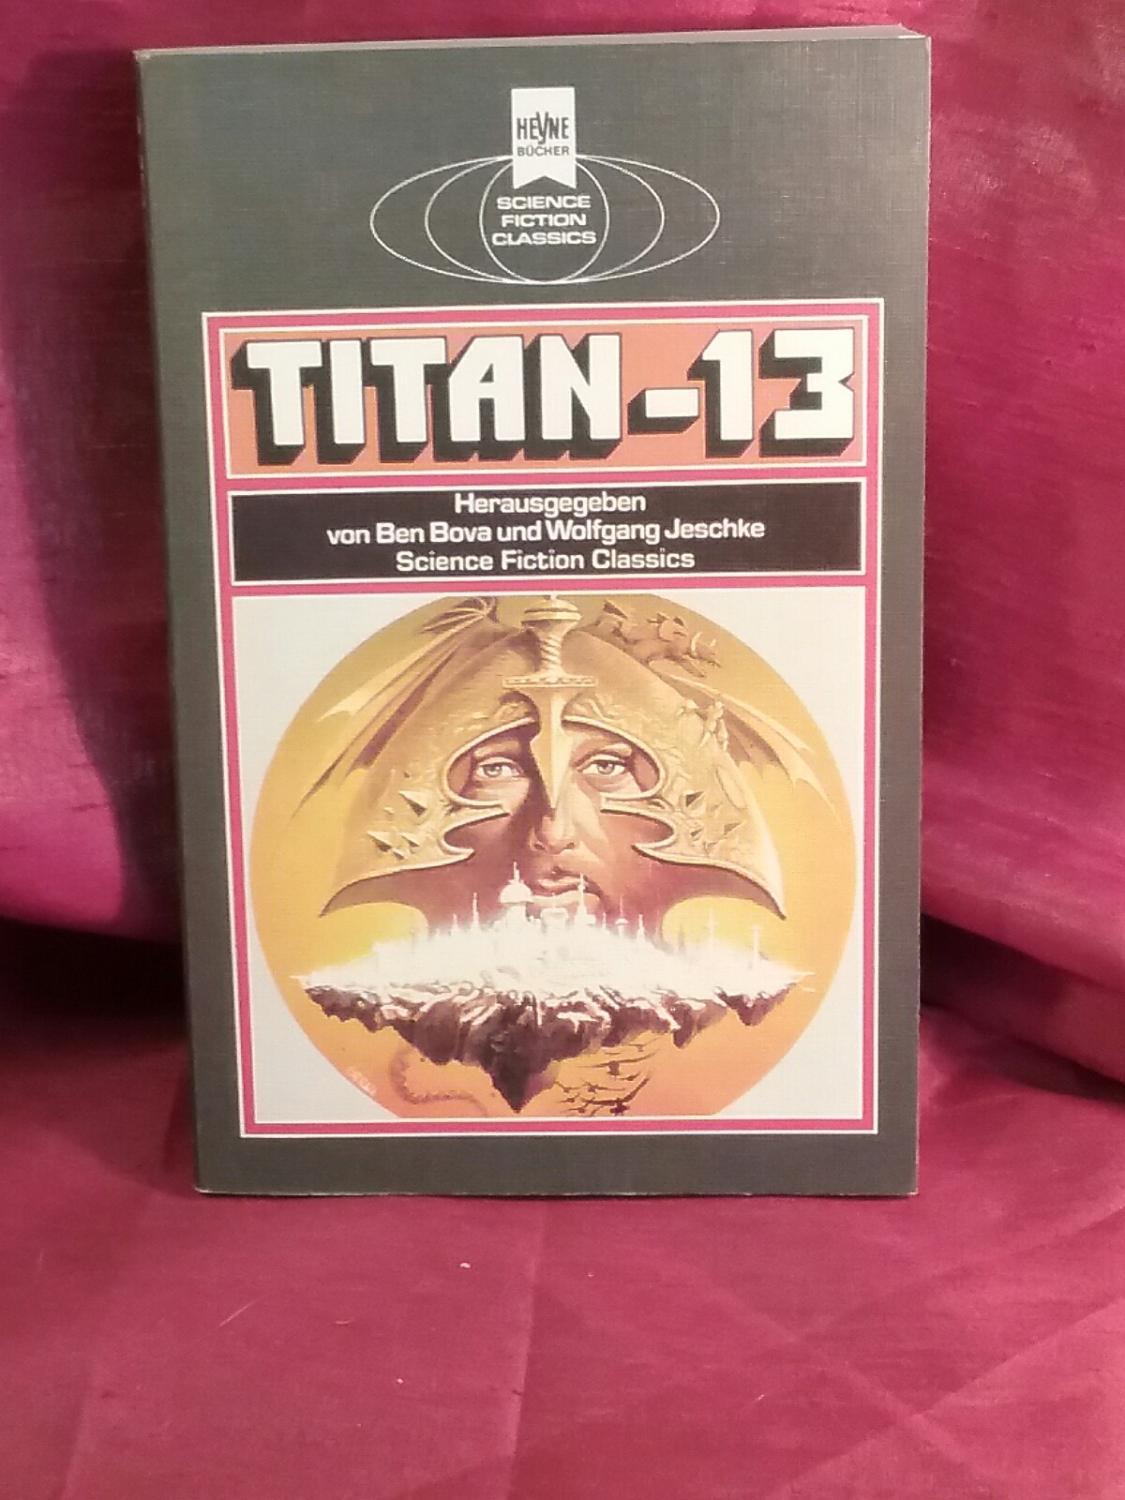 Titan XIII.